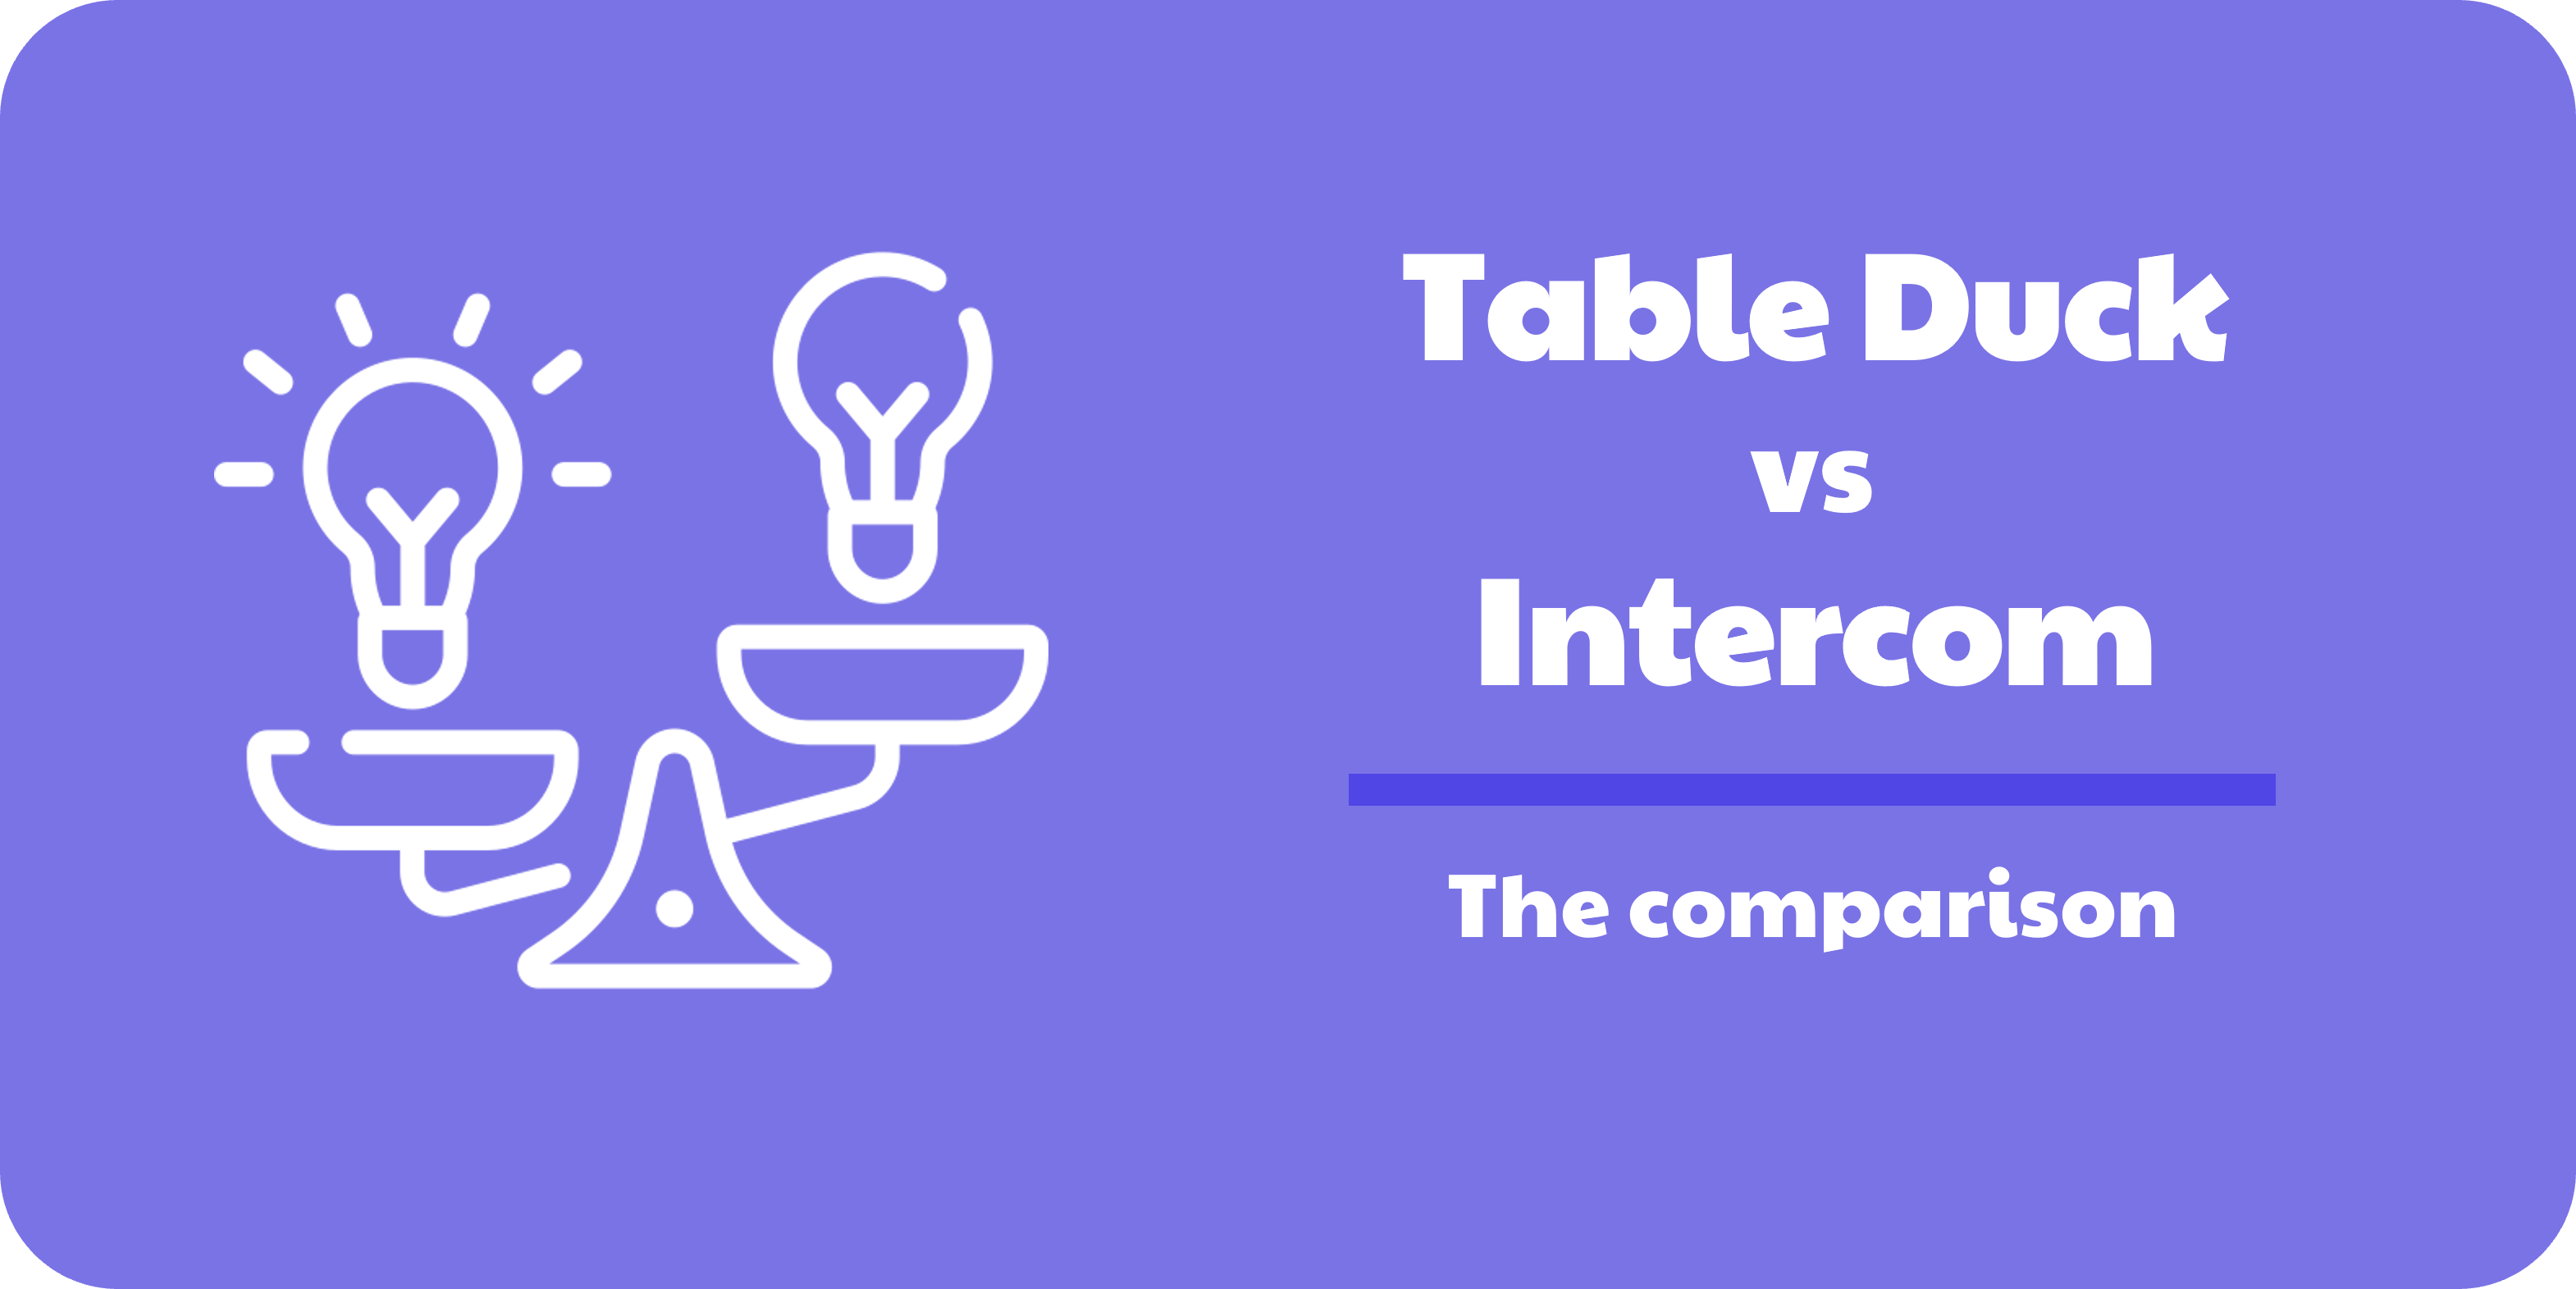 Table Duck as an alternative to Intercom